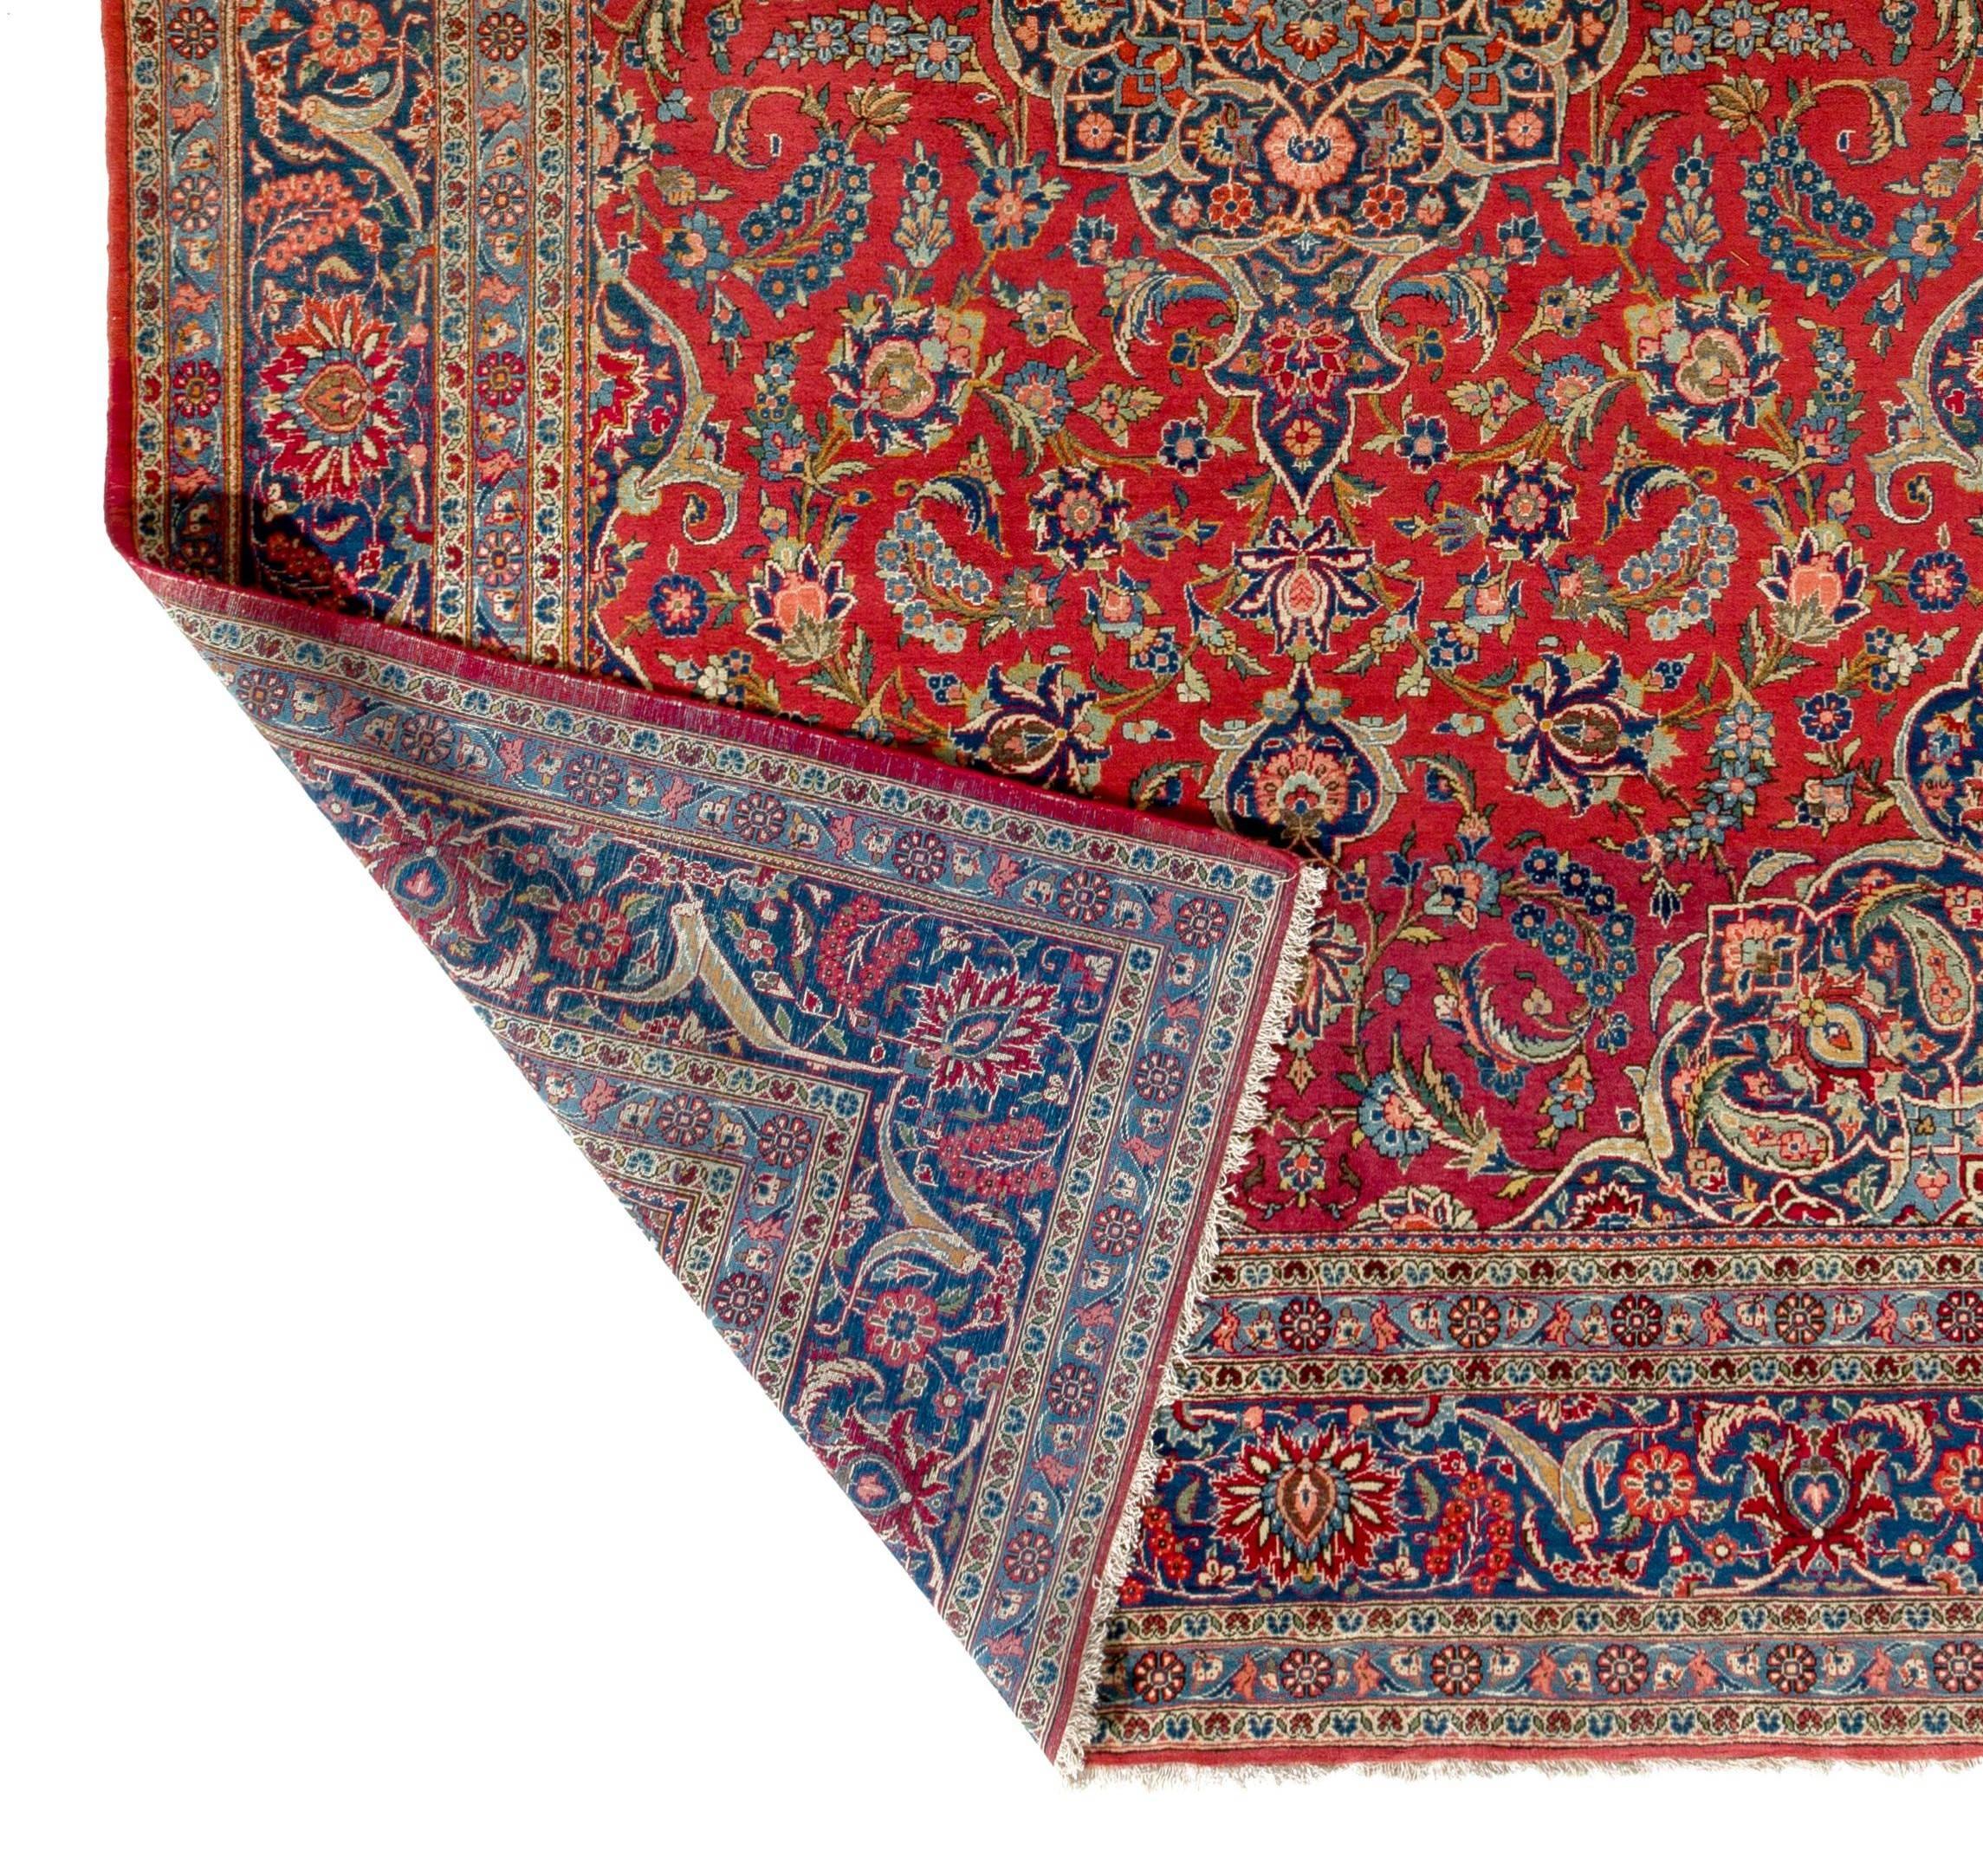 19th Century 7.1 x 10.6 Ft Fine Antique Persian Kashan Rug